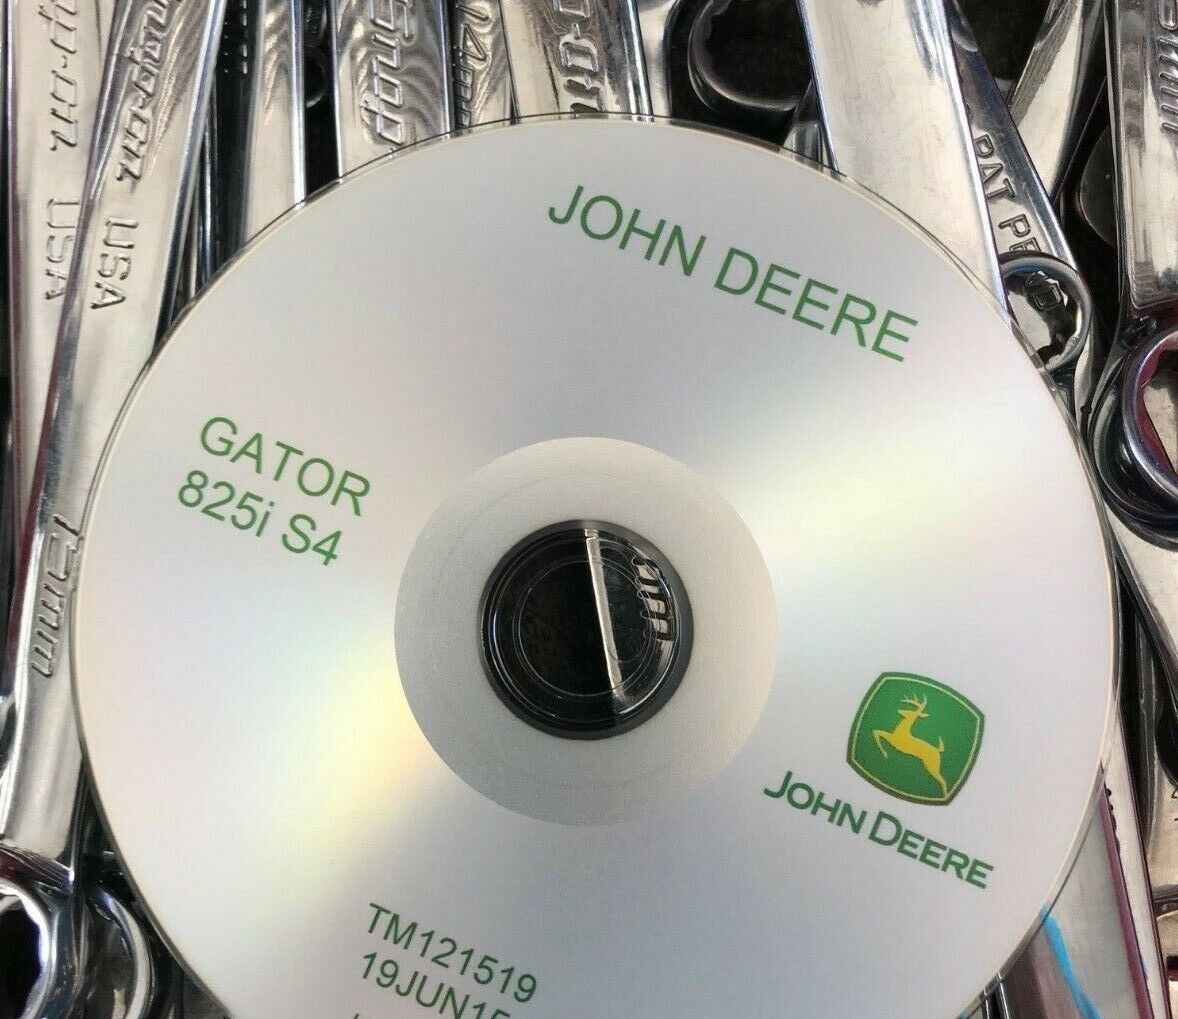 JOHN DEERE GATOR UTILITY XUV 825i S4 Technical Service Repair Manual TM121519 CD